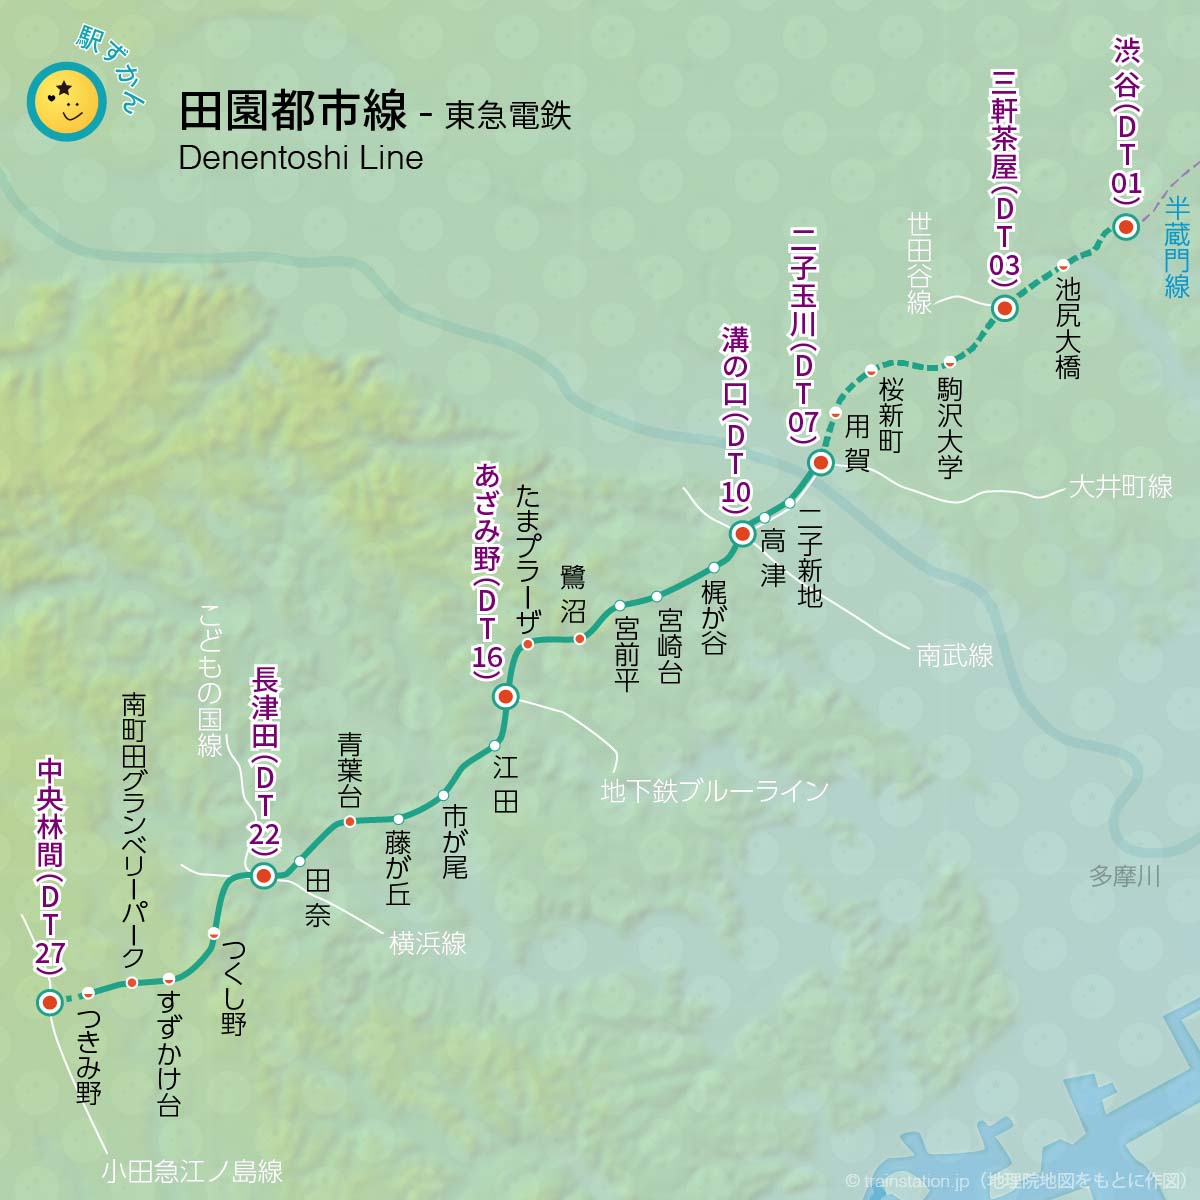 東急田園都市線路線図と地形マップ